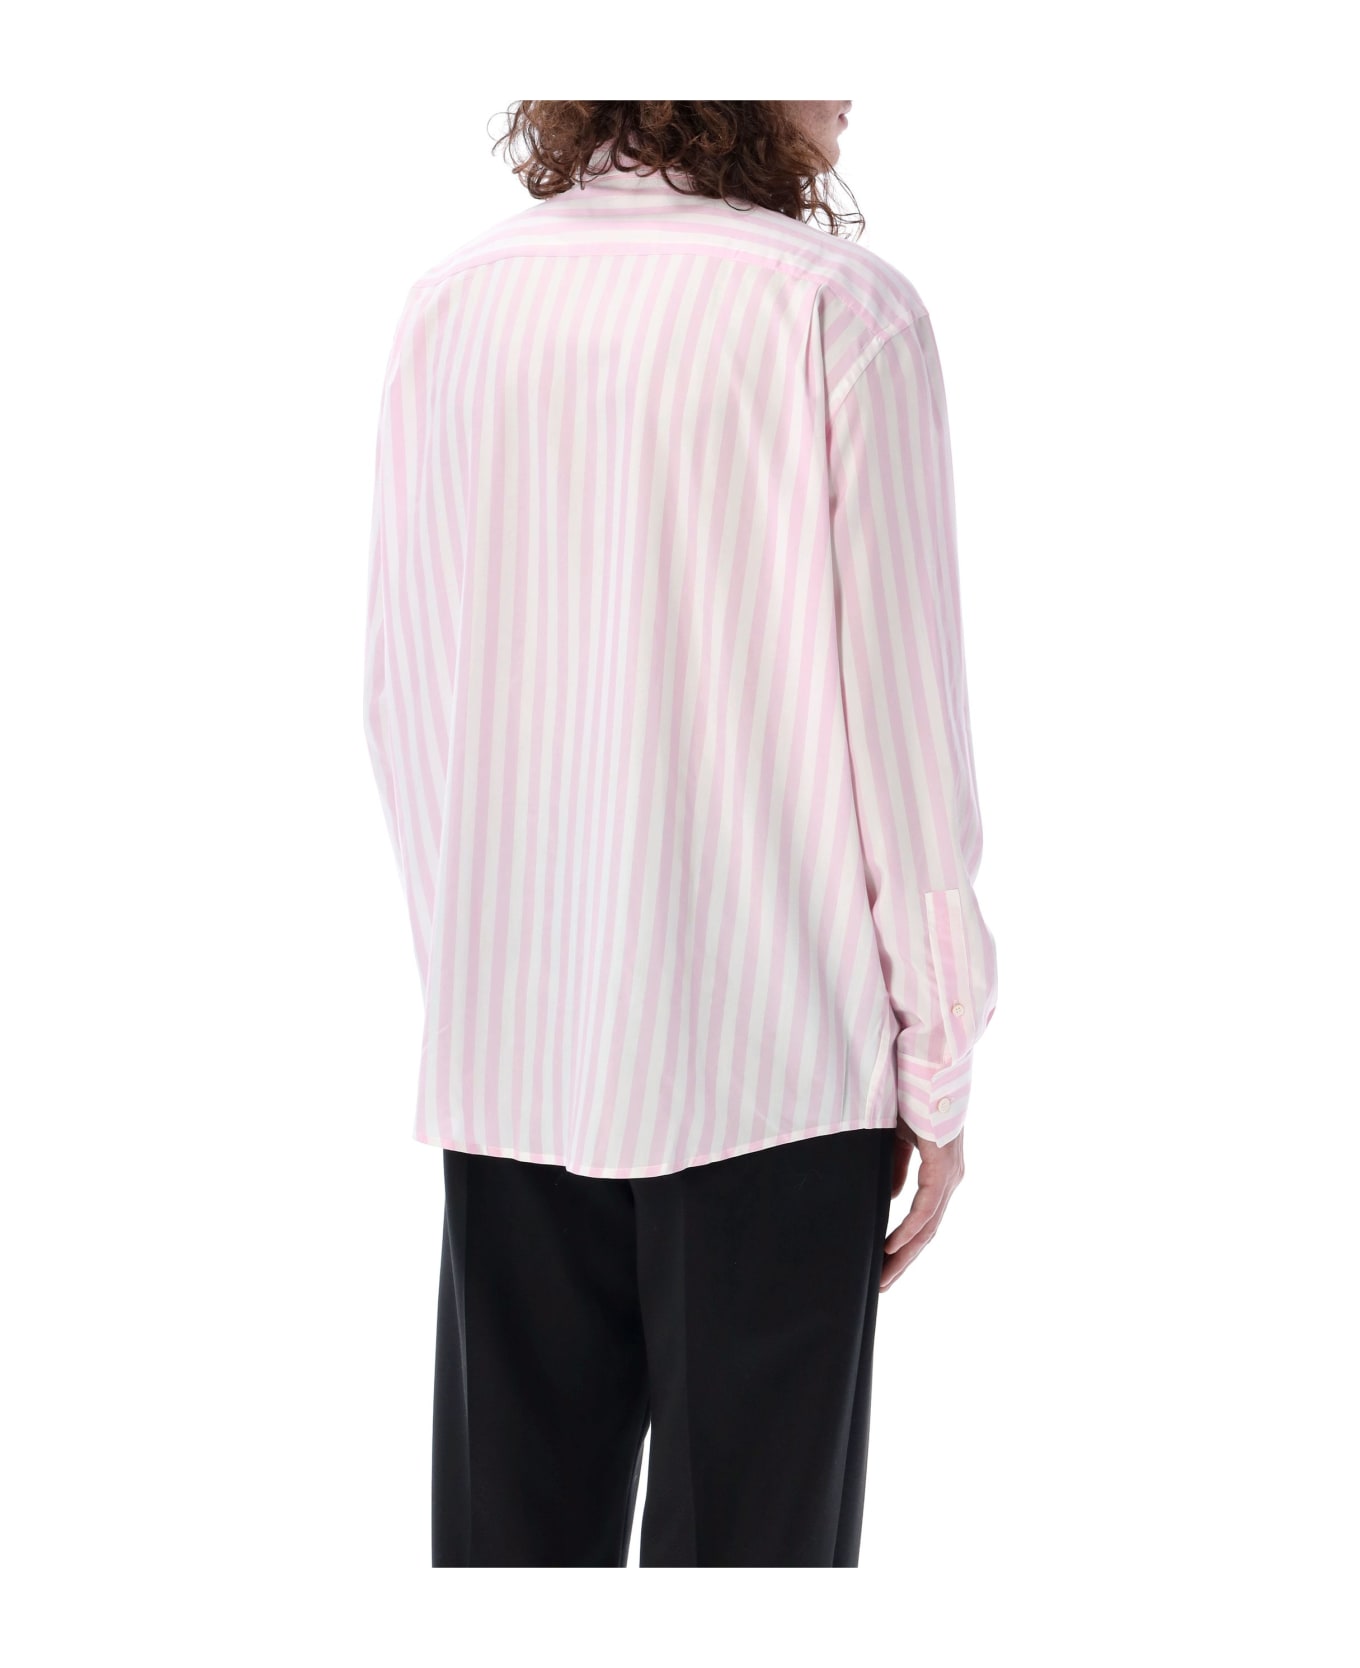 Acne Studios Stripe Button-up Shirt - PINK WHITE STRIPES